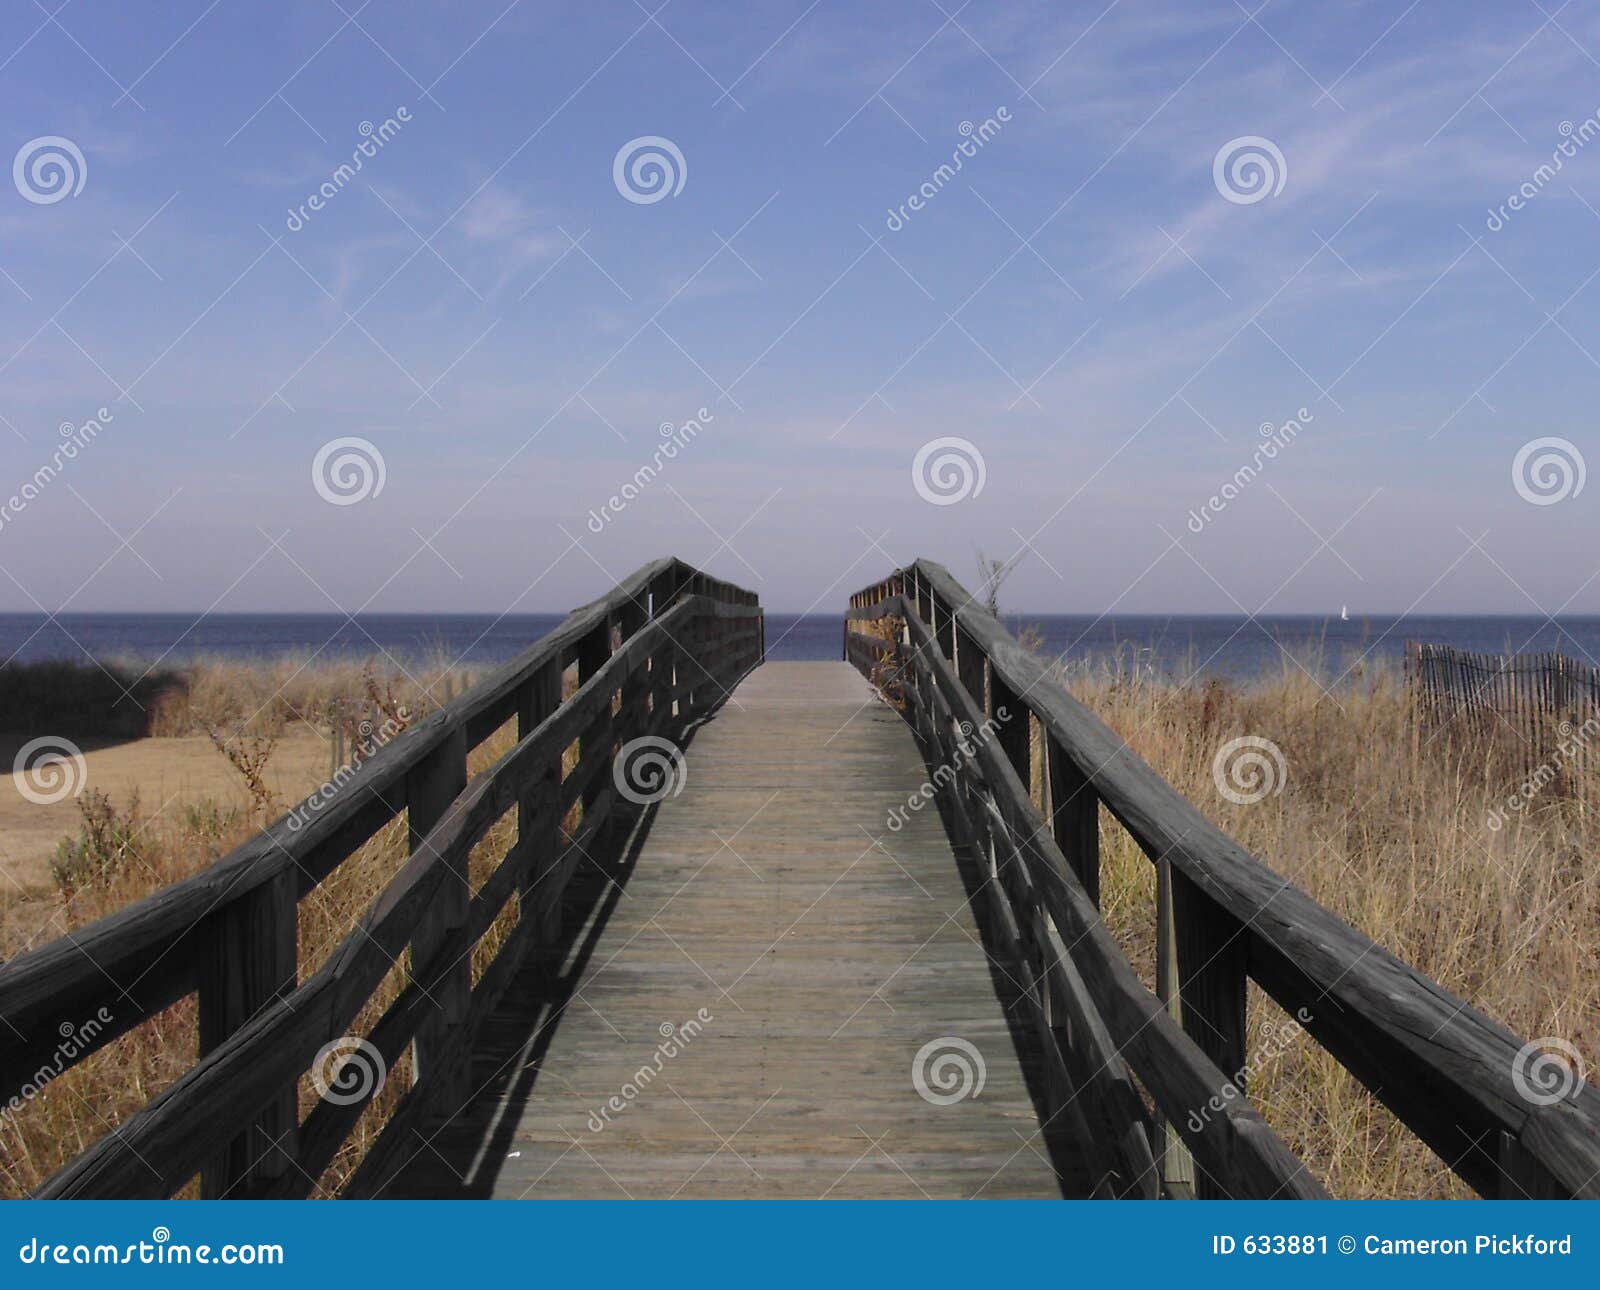 Wooden Walkway To Beach Stock Image - Image: 633881